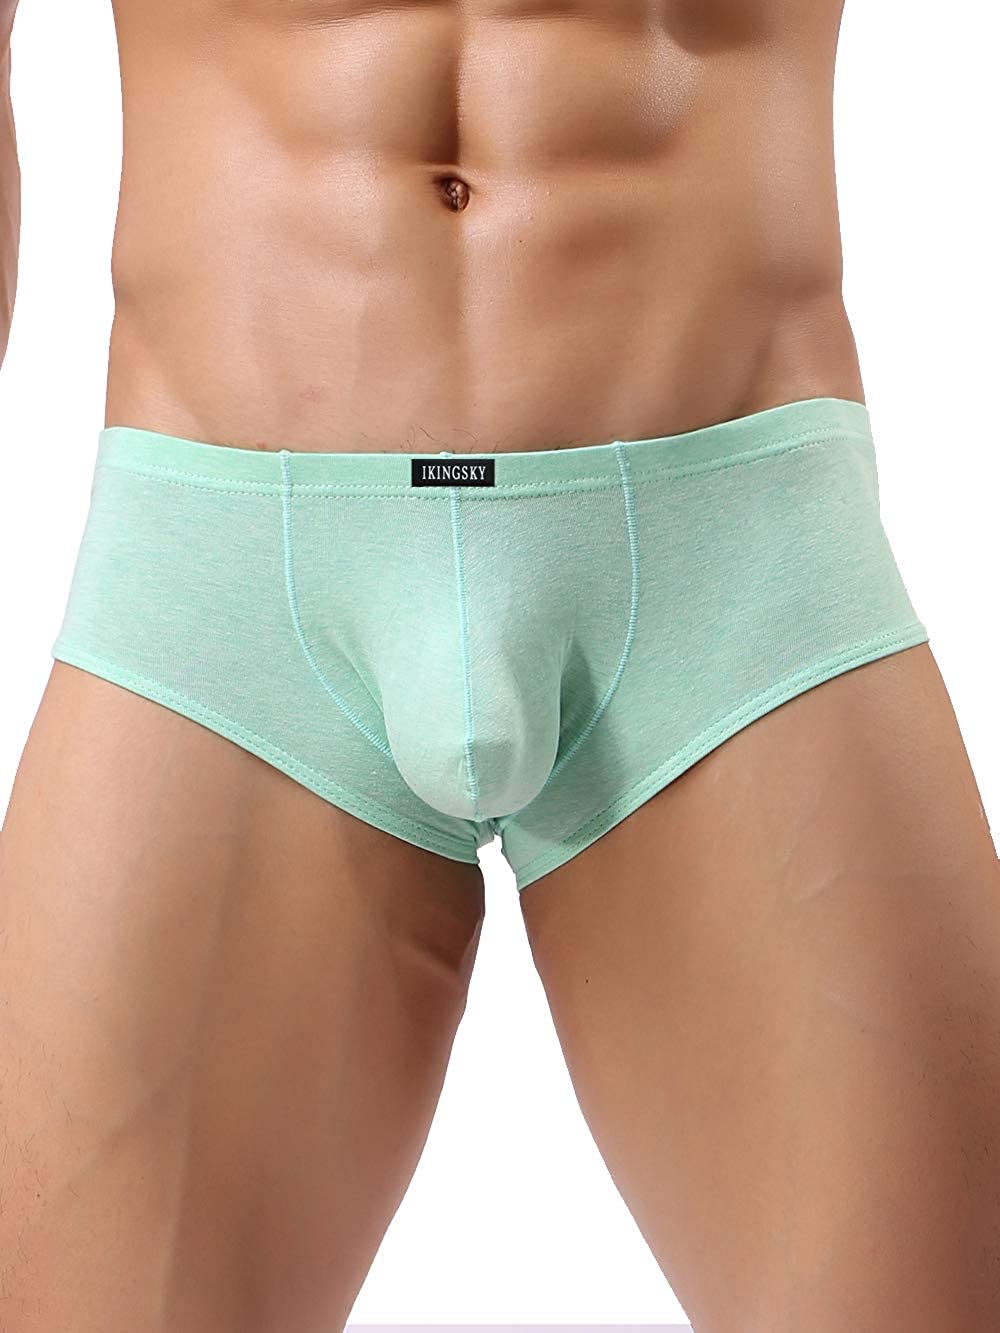 Ikingsky Men S Cotton Boxer Briefs Underwear Sexy Low Rise Men Pouch